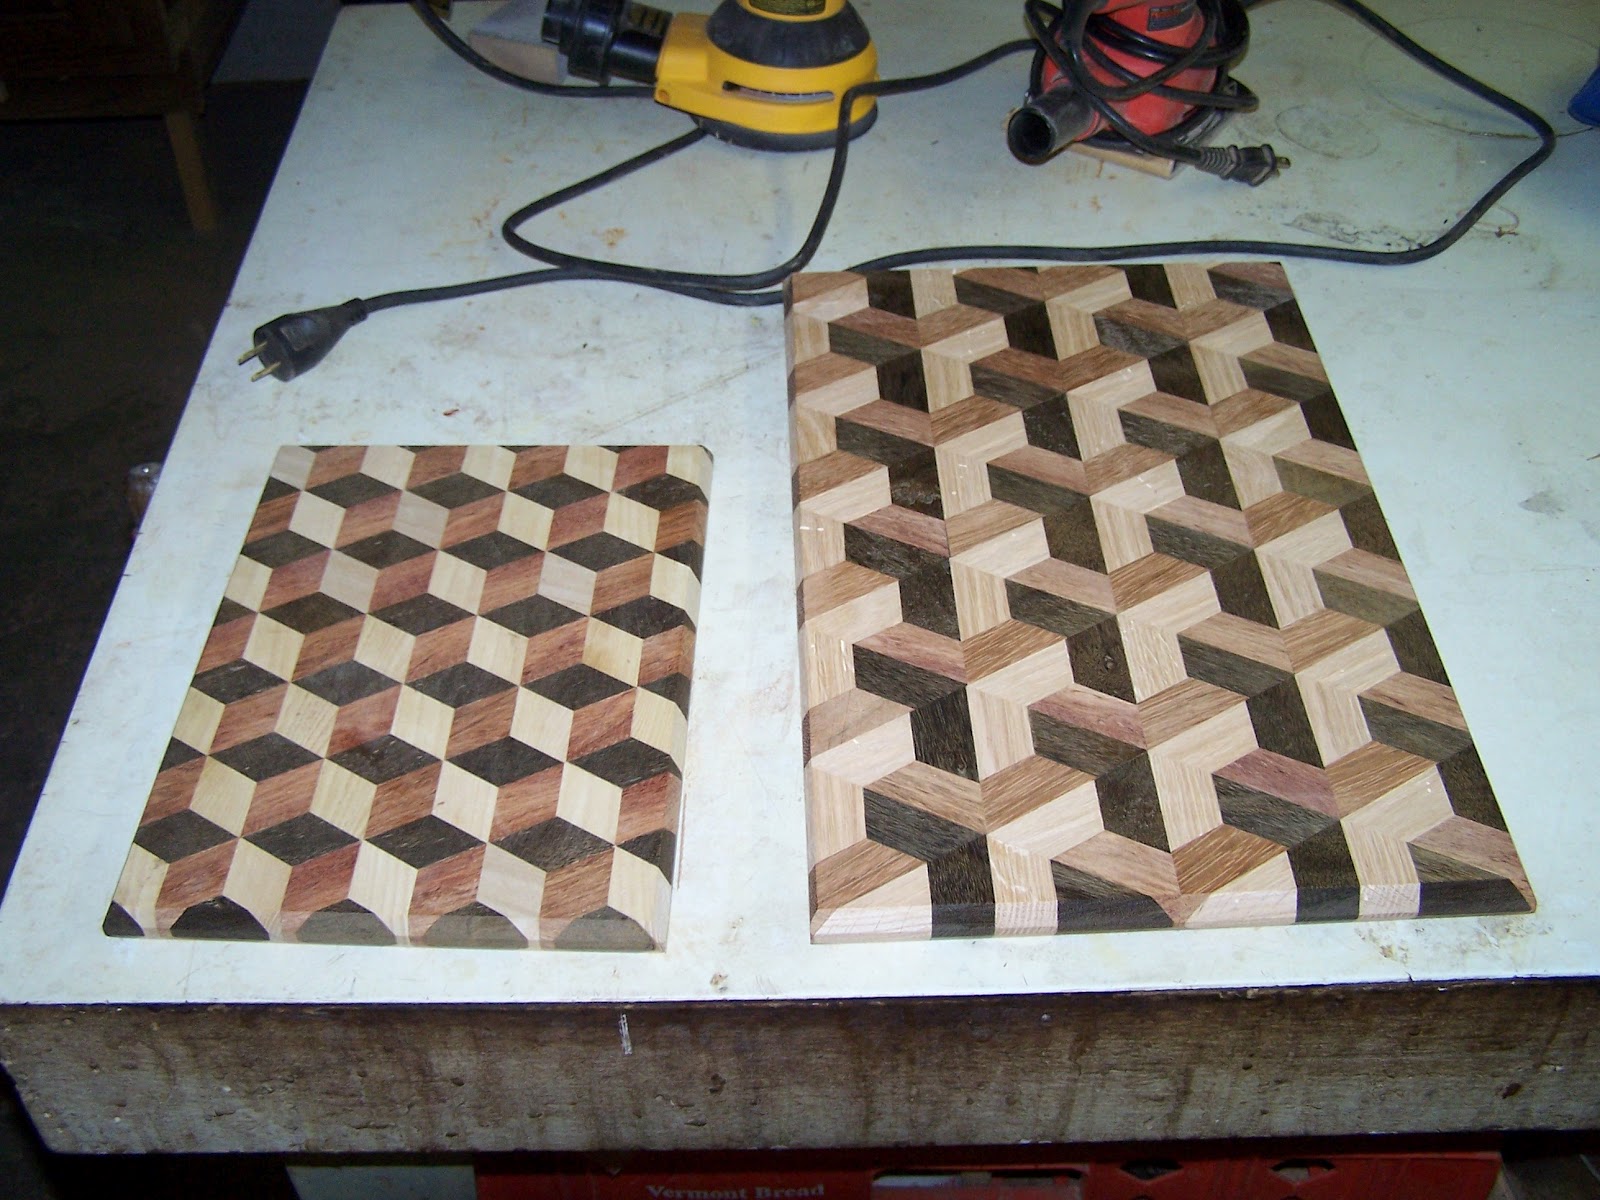 3D Patterns in wood working | The Broken Clock Woodworking 